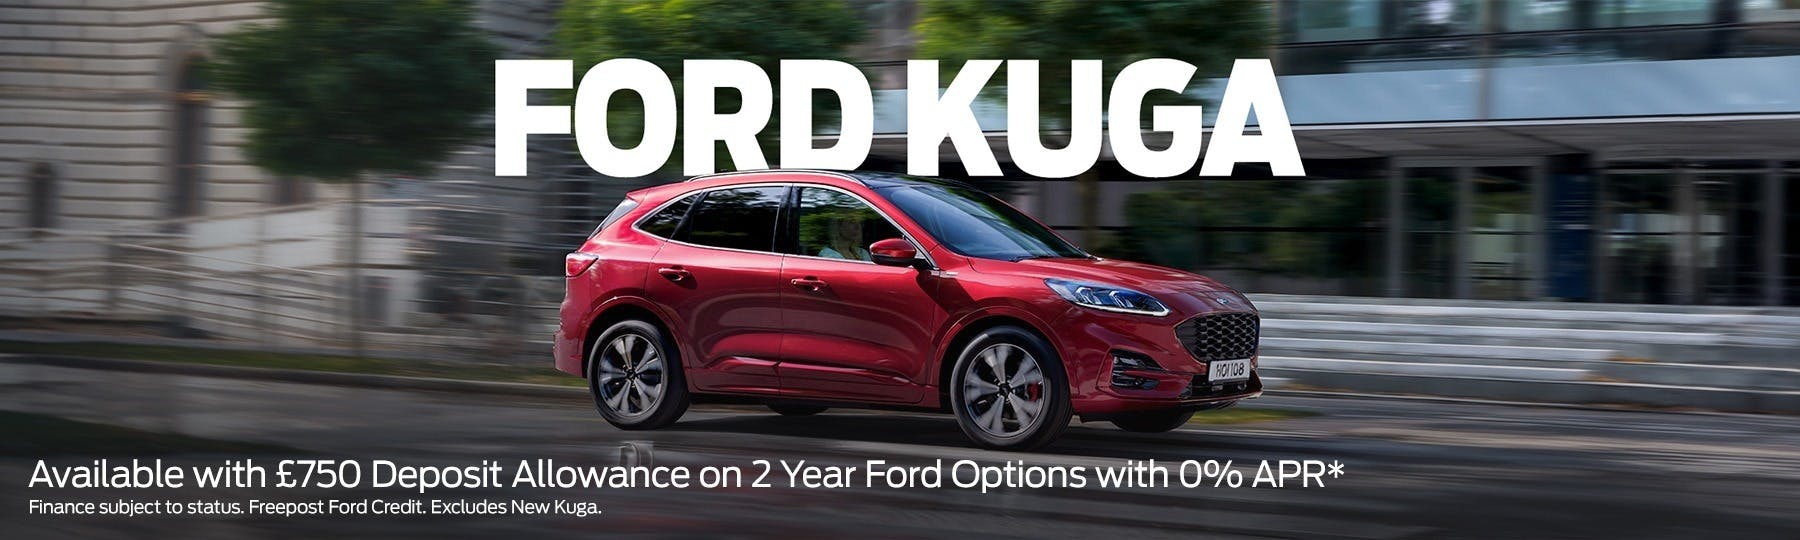 Ford Kuga New Car Offer